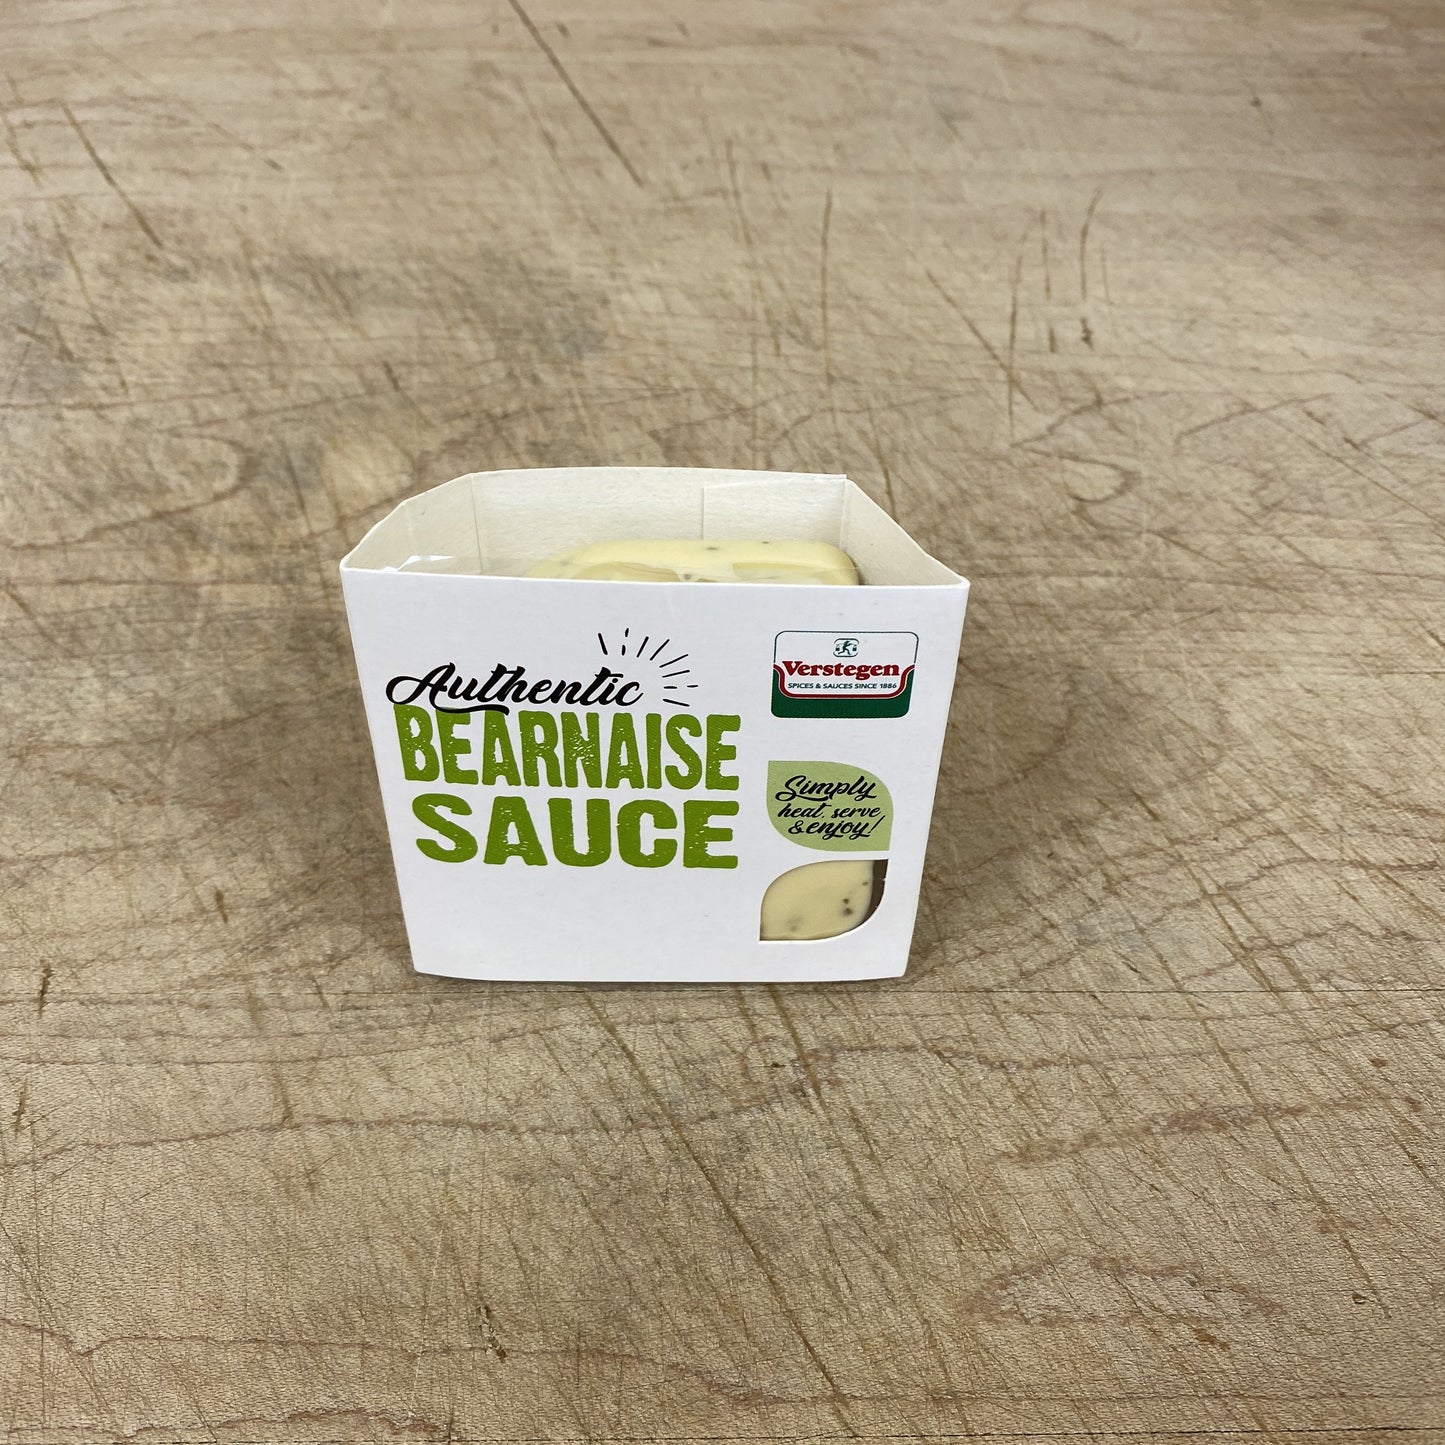 Bearnaise Sauce